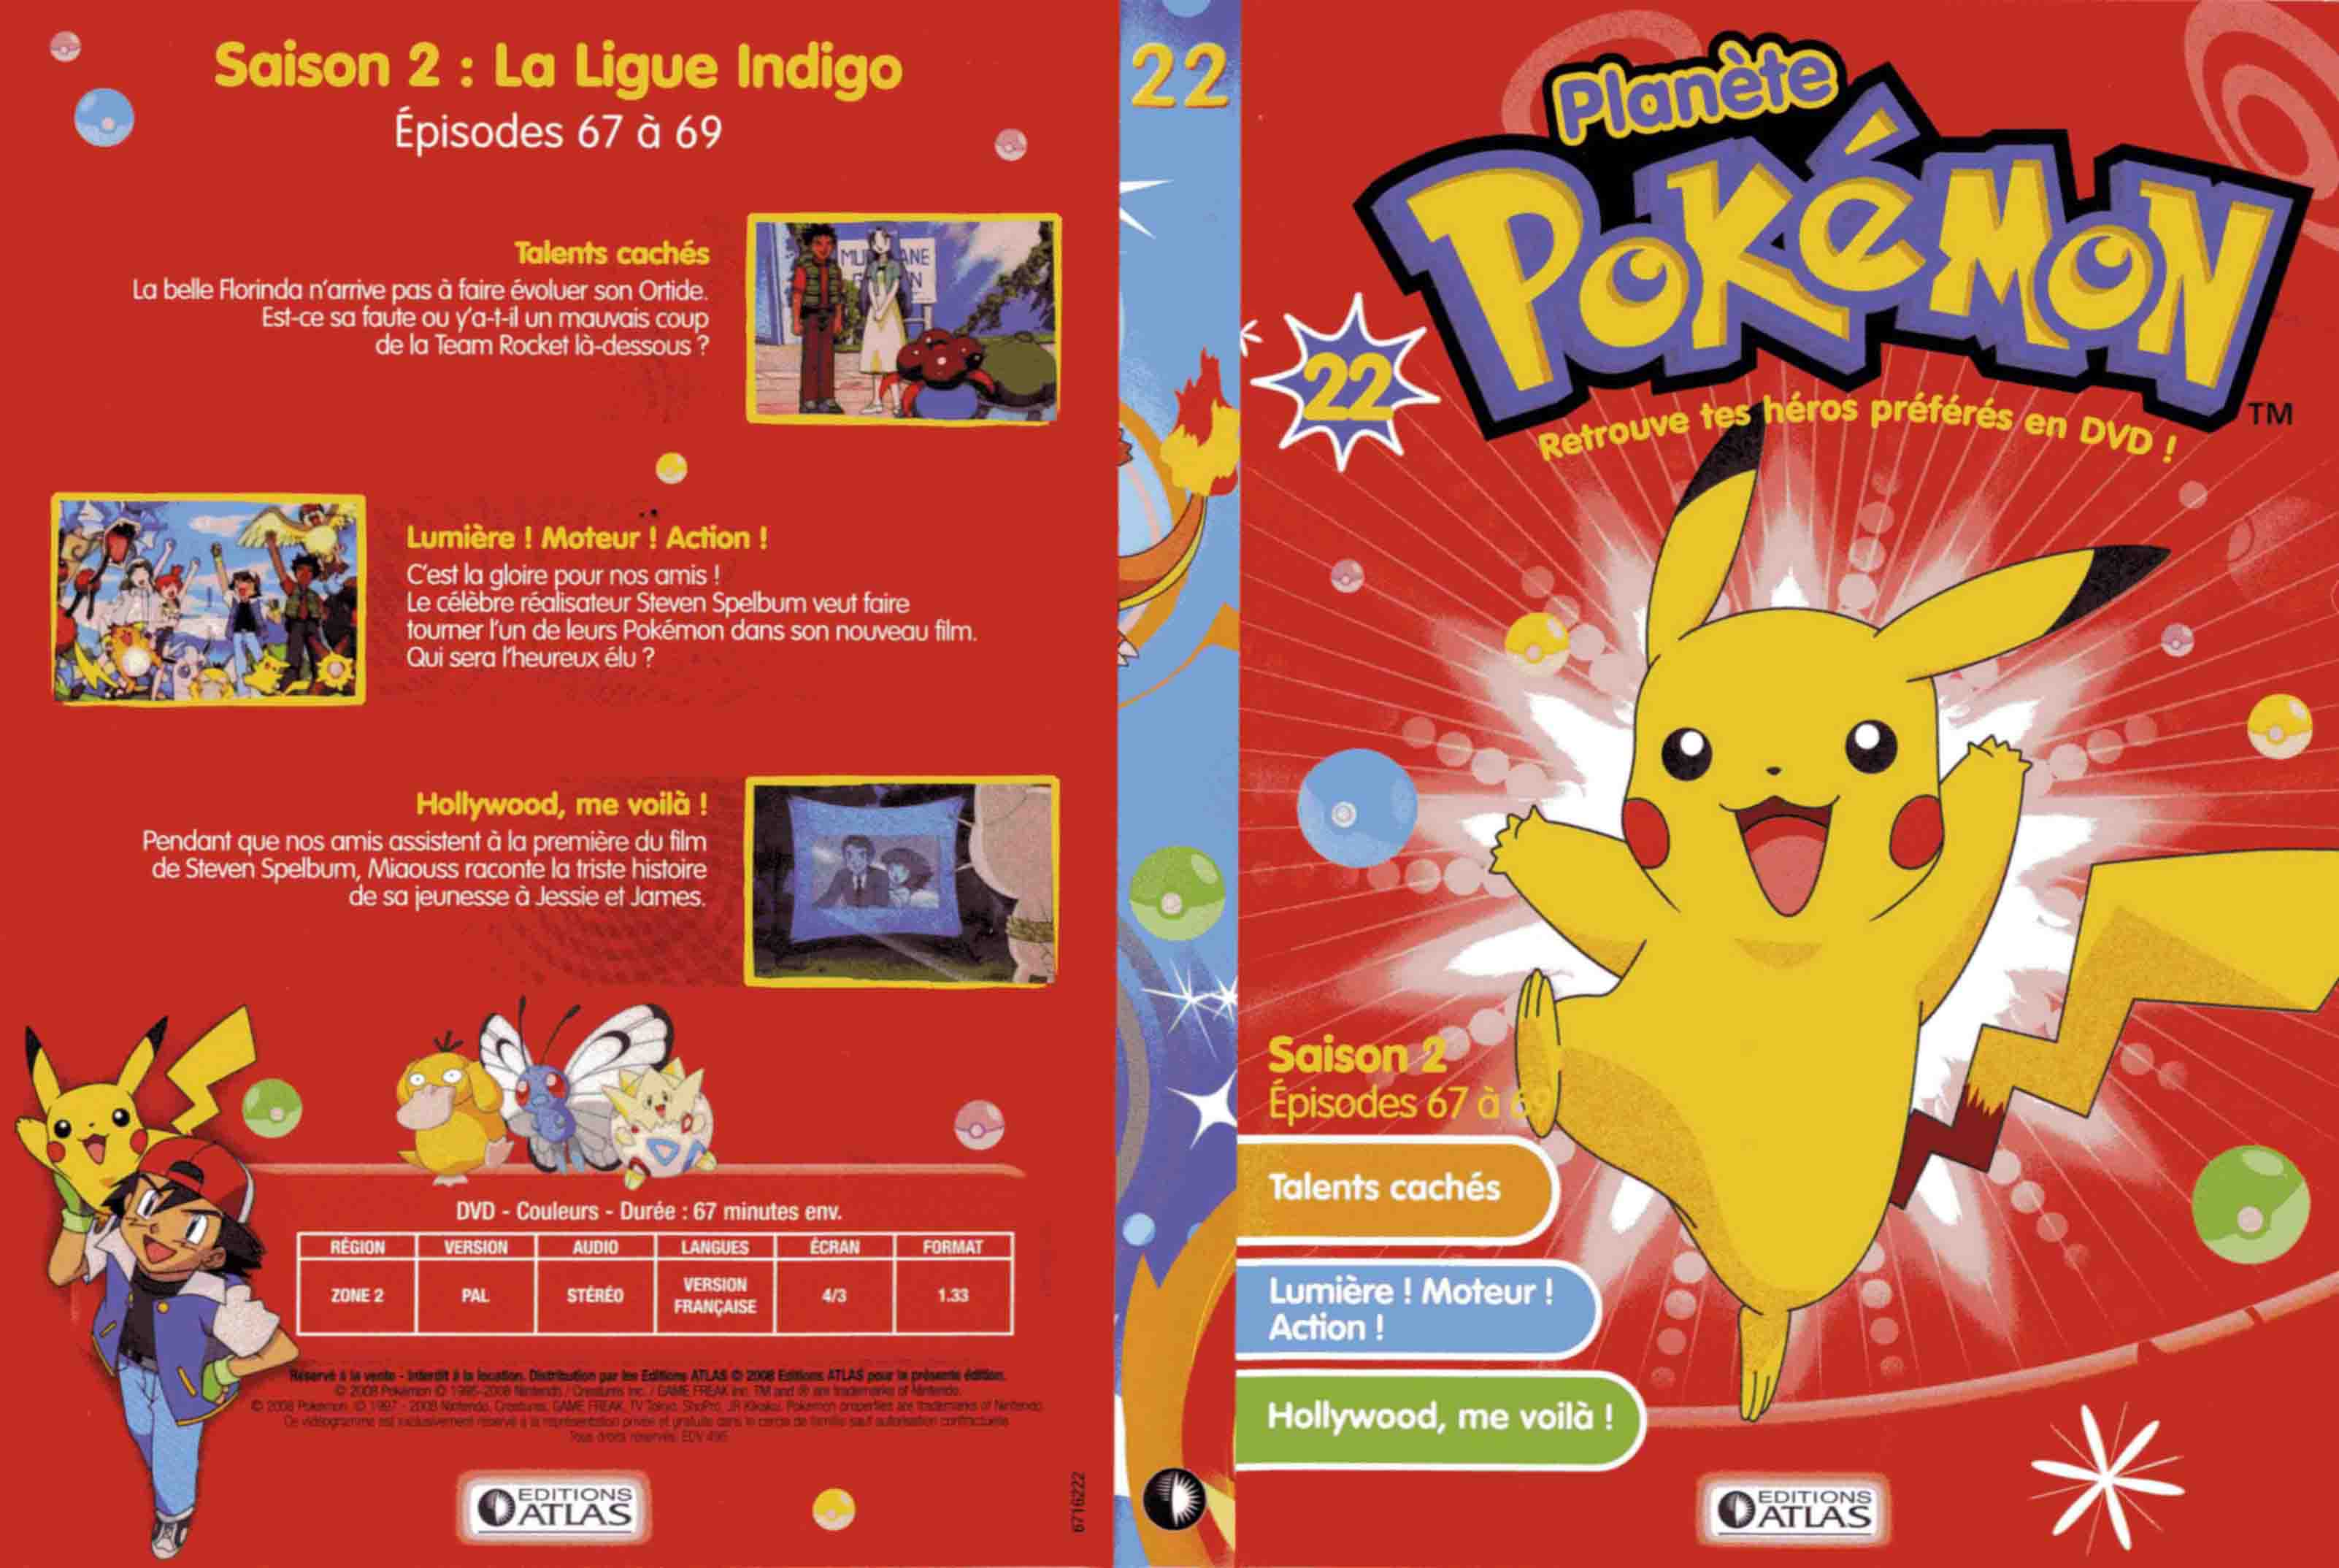 Jaquette DVD Planete Pokemon vol 22